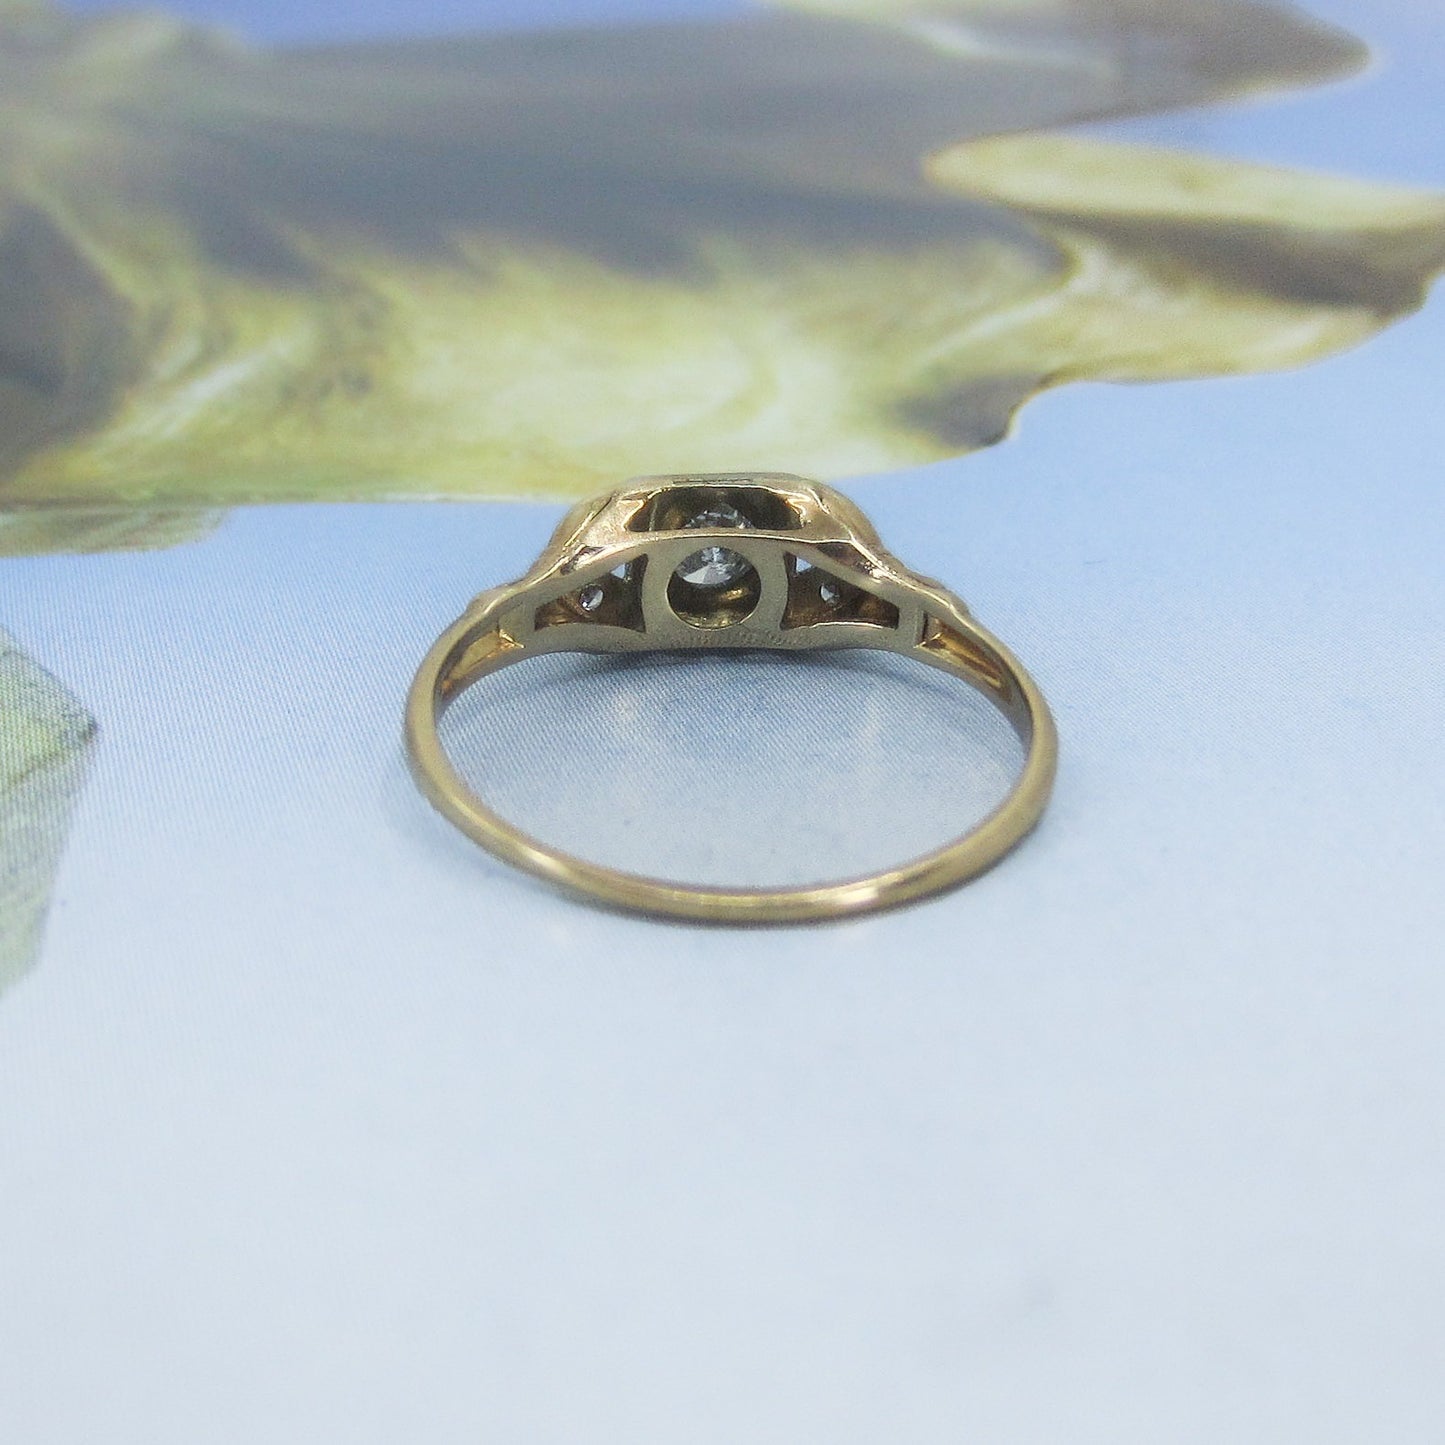 SOLD--Art Deco Diamond Ring 14k c. 1930